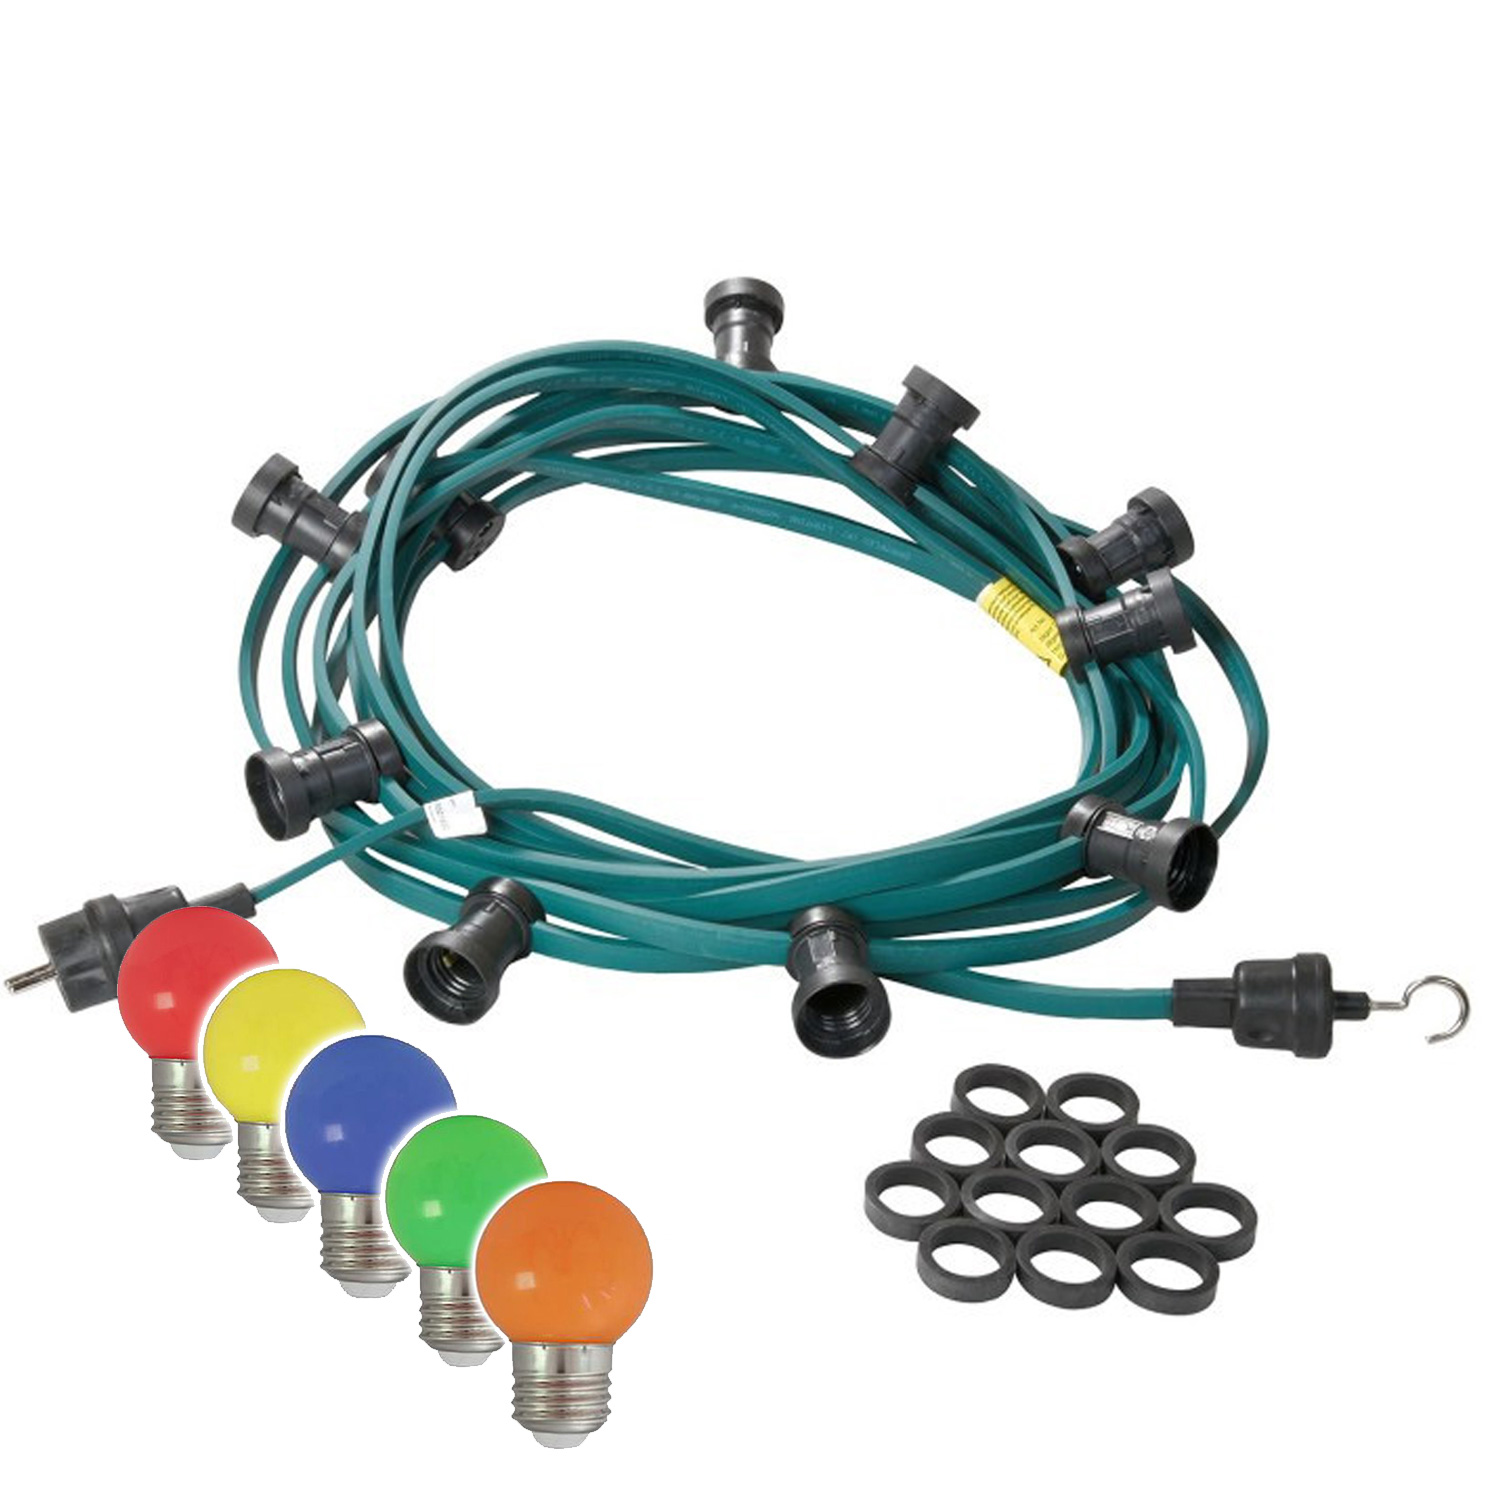 Illu-/Partylichterkette | E27-Fassungen | Made in Germany | mit farbigen, matten LED-Lampen | 5m | 5x E27-Fassungen